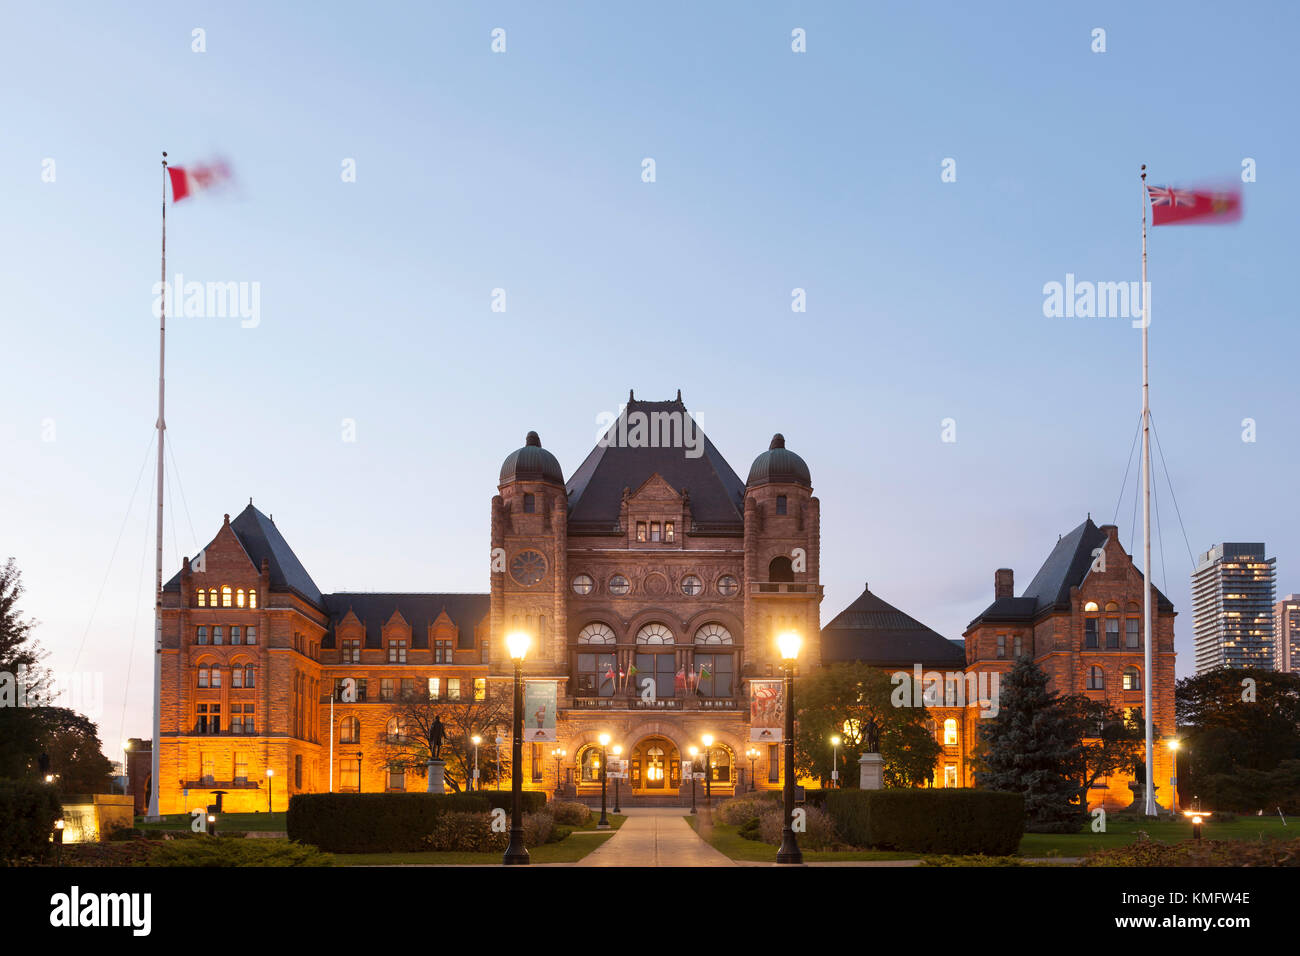 Toronto, Canada - Oct 20, 2017: The Ontario Legislative Building or House of Parliament illuminated at night. City of Toronto, Canada Stock Photo